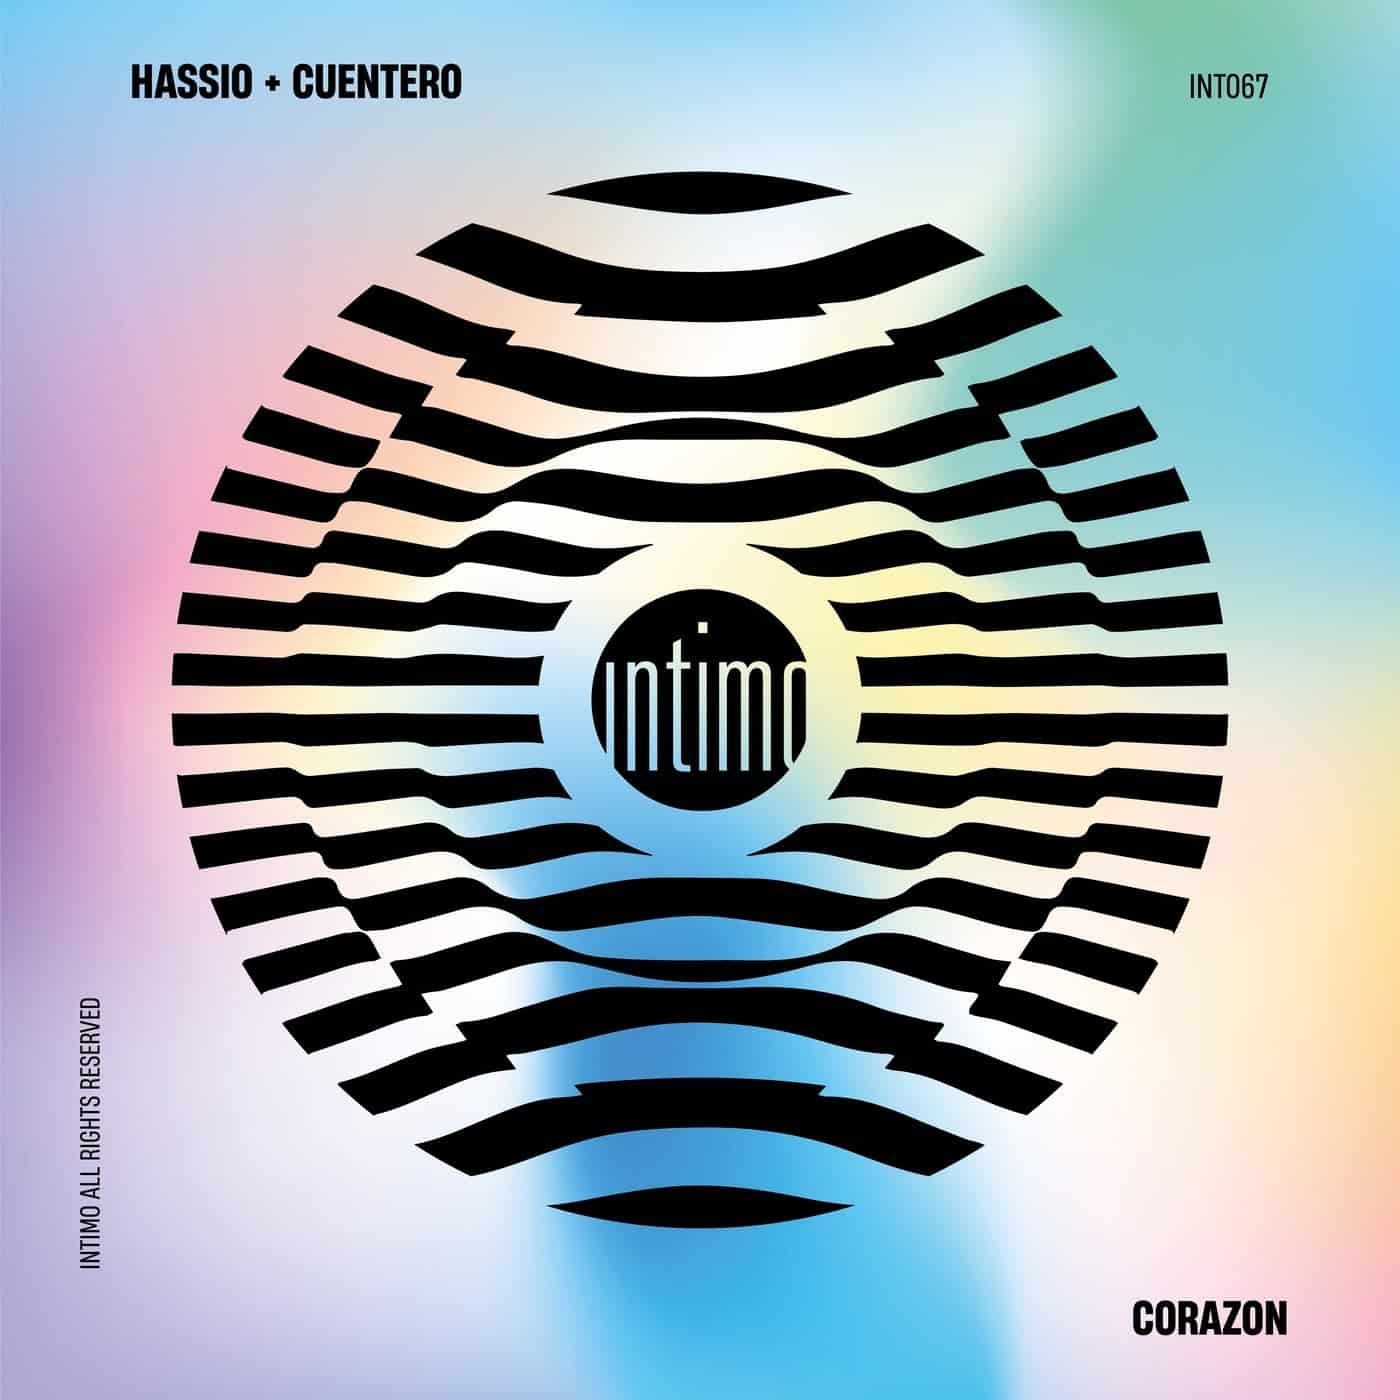 Download Hassio (COL), Cuentero - Corazon on Electrobuzz